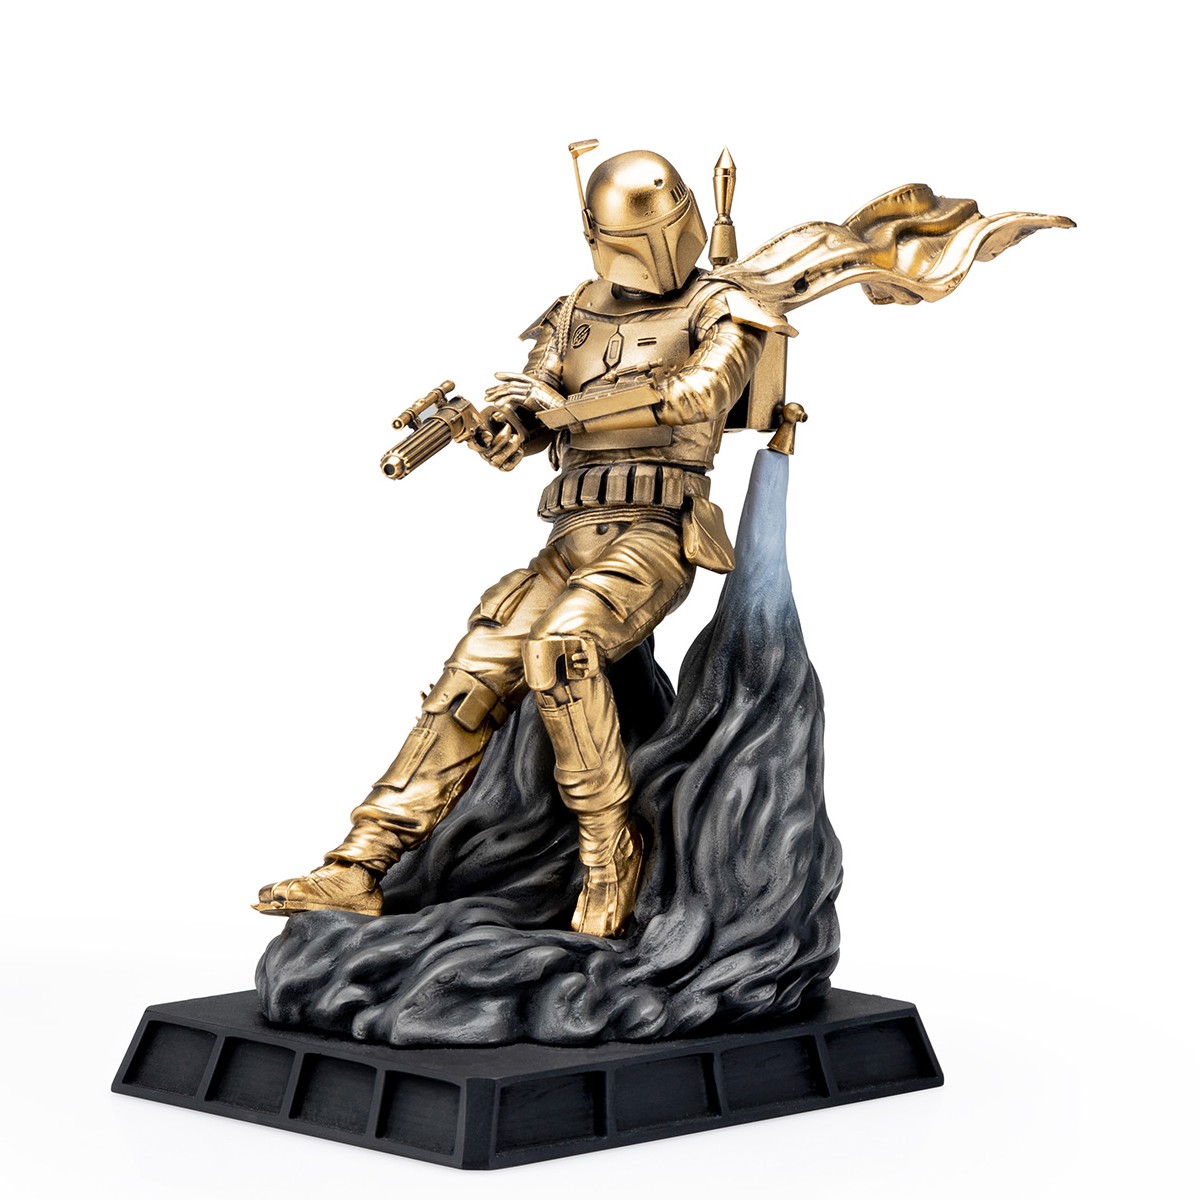 Boba Fett Battle Ready Figurine (Gilt Edition) (Prototype Shown) View 1